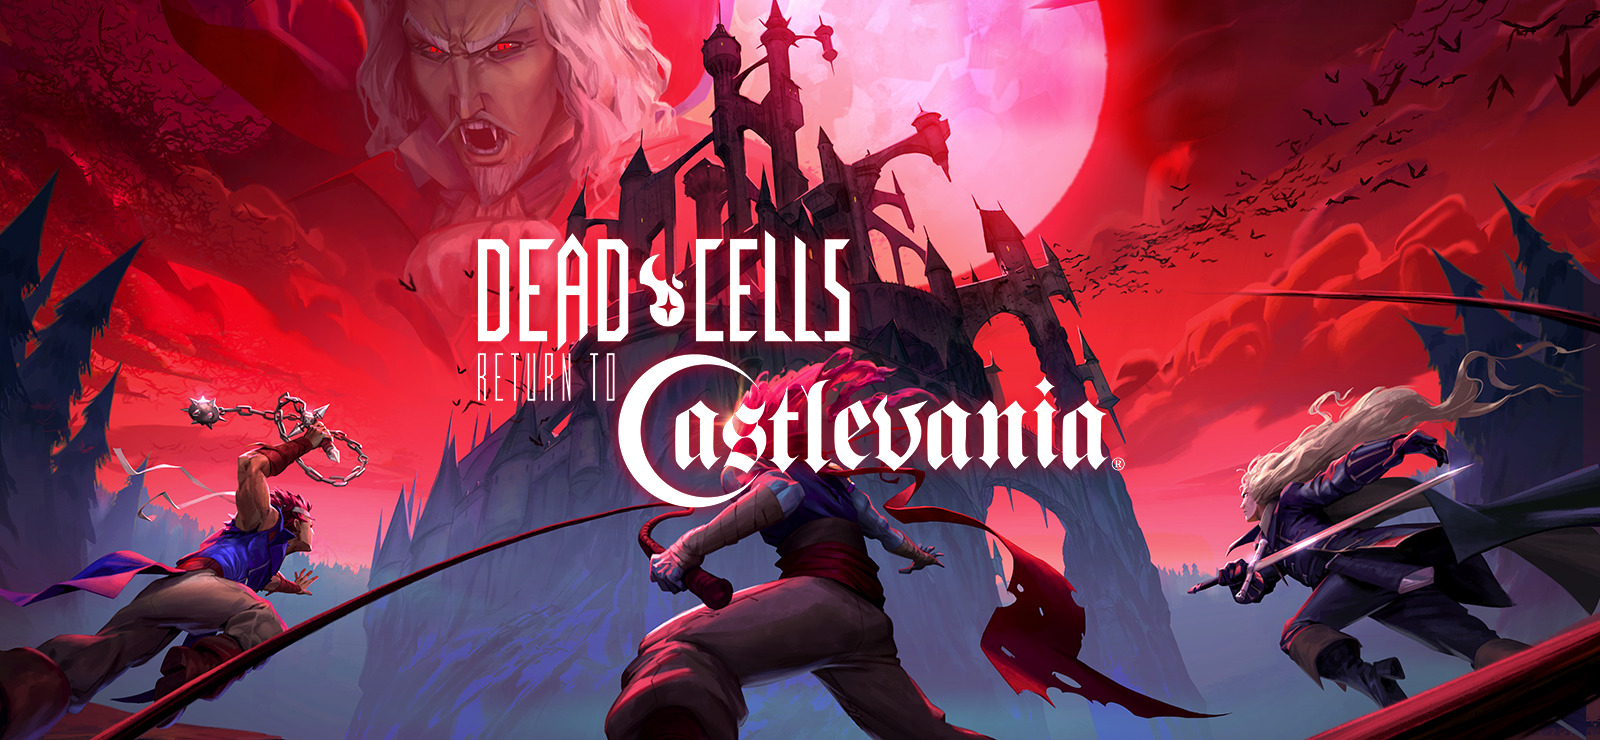 dead cells return to castlevania metacritic